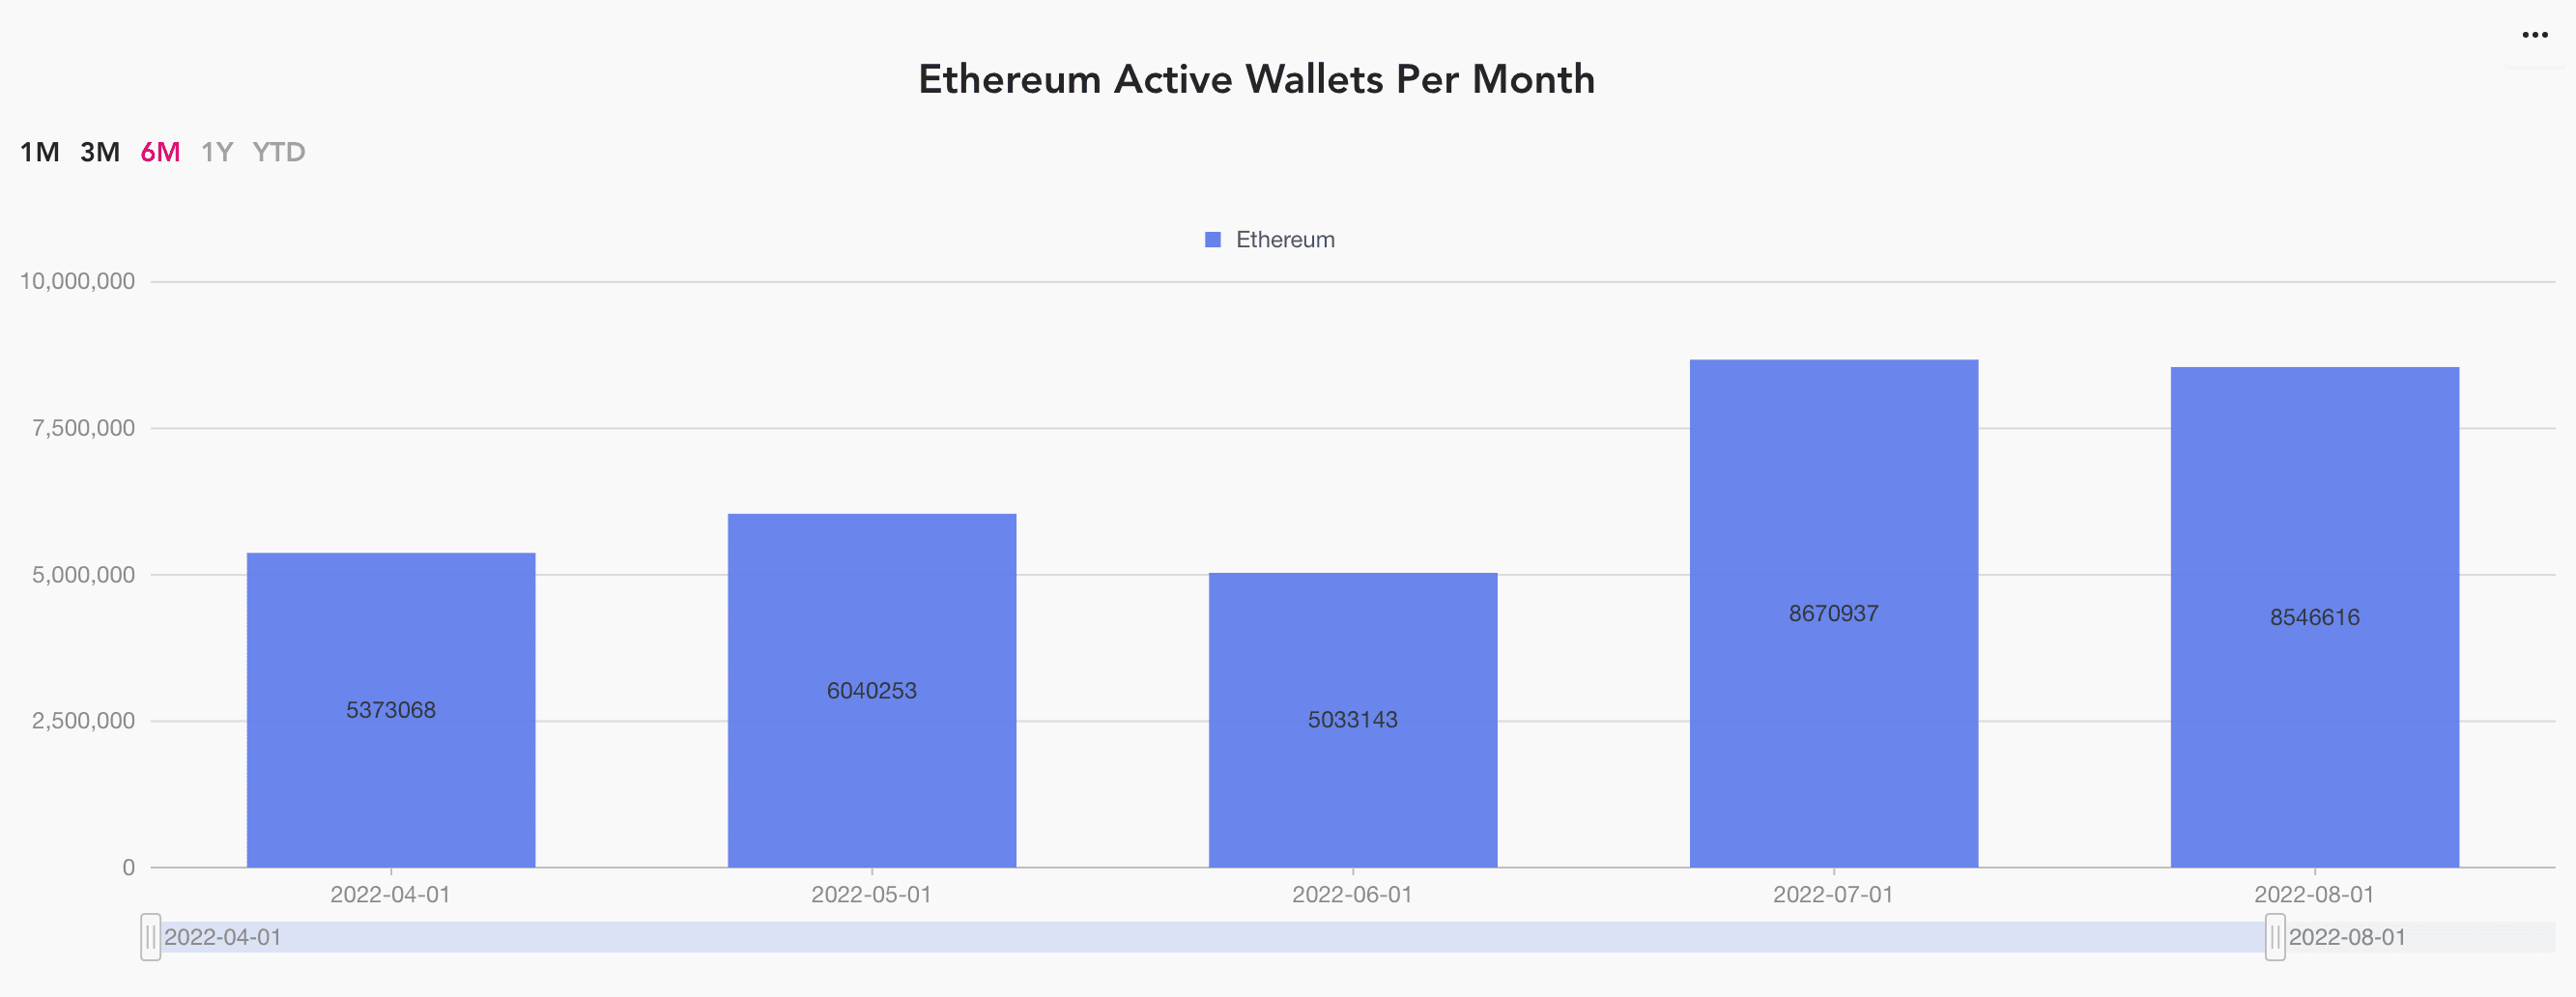 ethereum active wallets per month